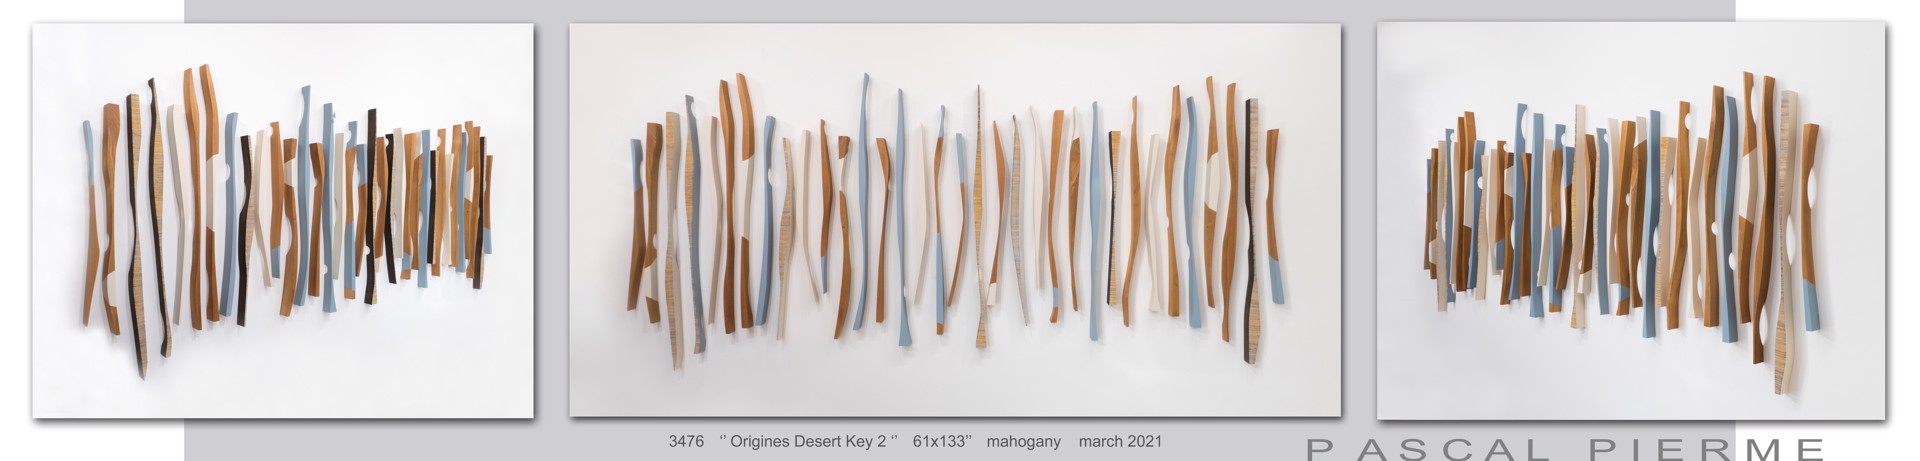 Origines Desert Key 2 by Pascal Piermé